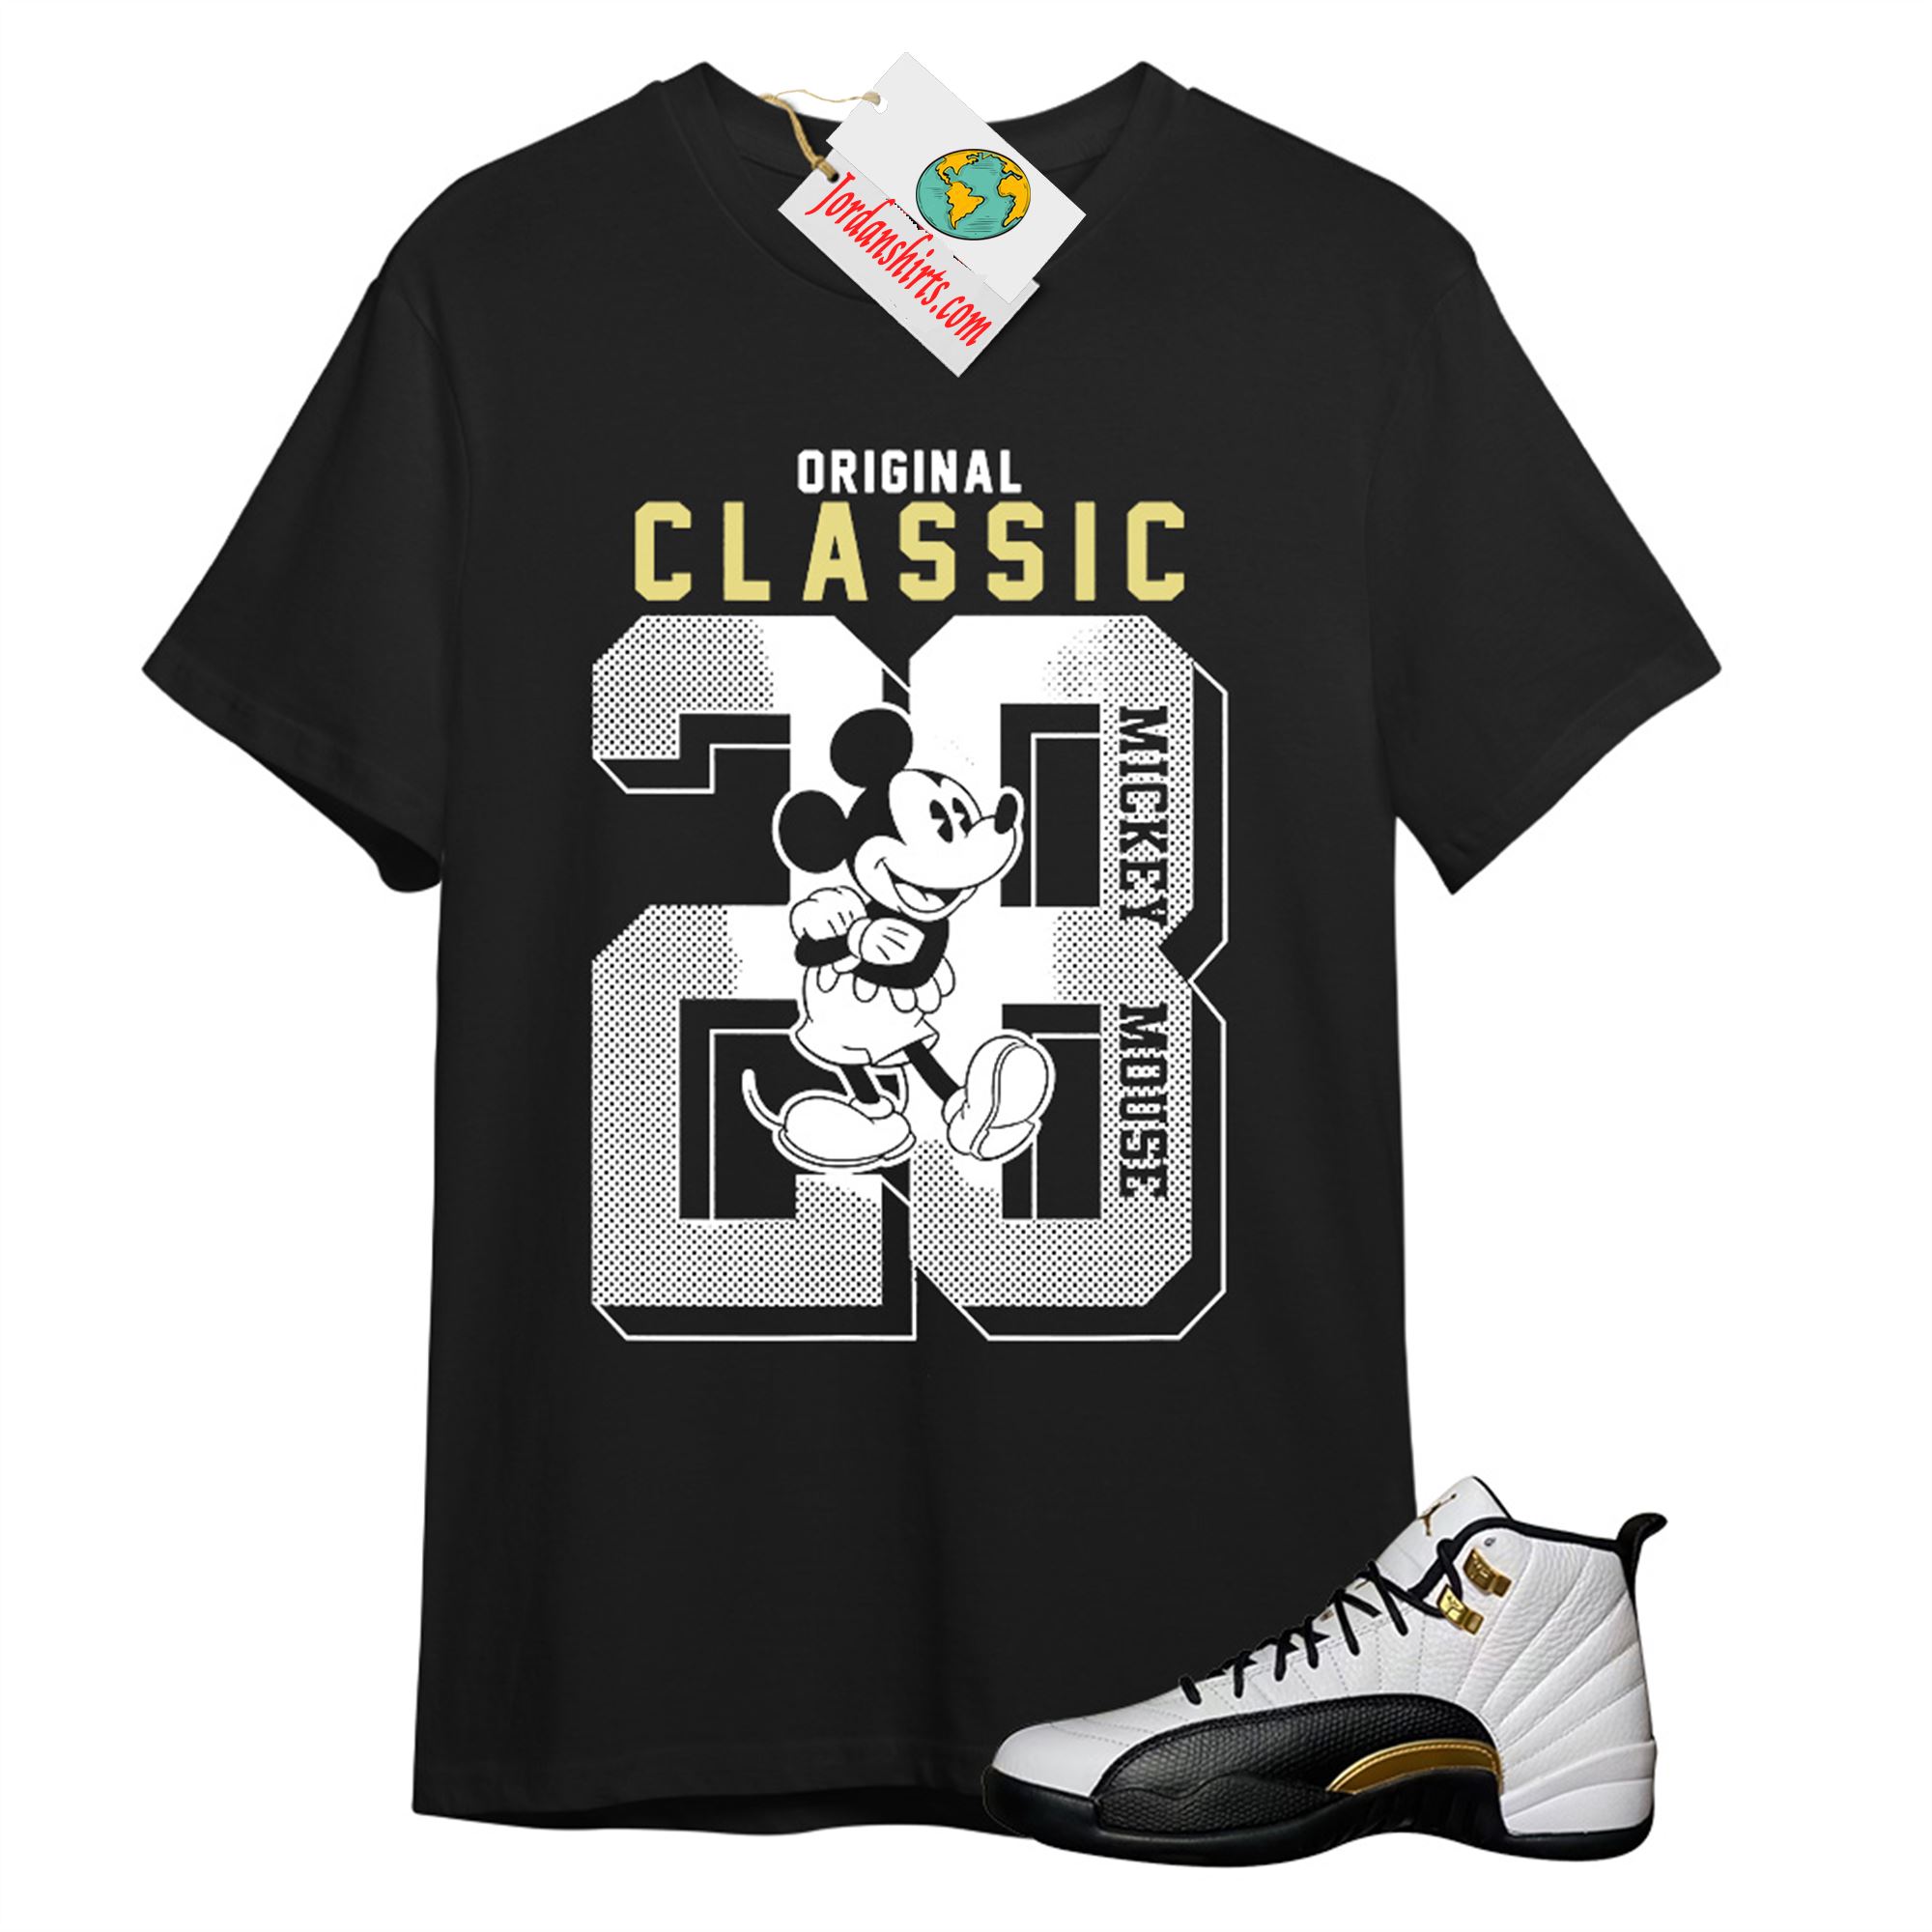 Jordan 12 Shirt, Disney Mickey Mouse Classic 28 Black T-shirt Air Jordan 12 Royalty 12s Full Size Up To 5xl